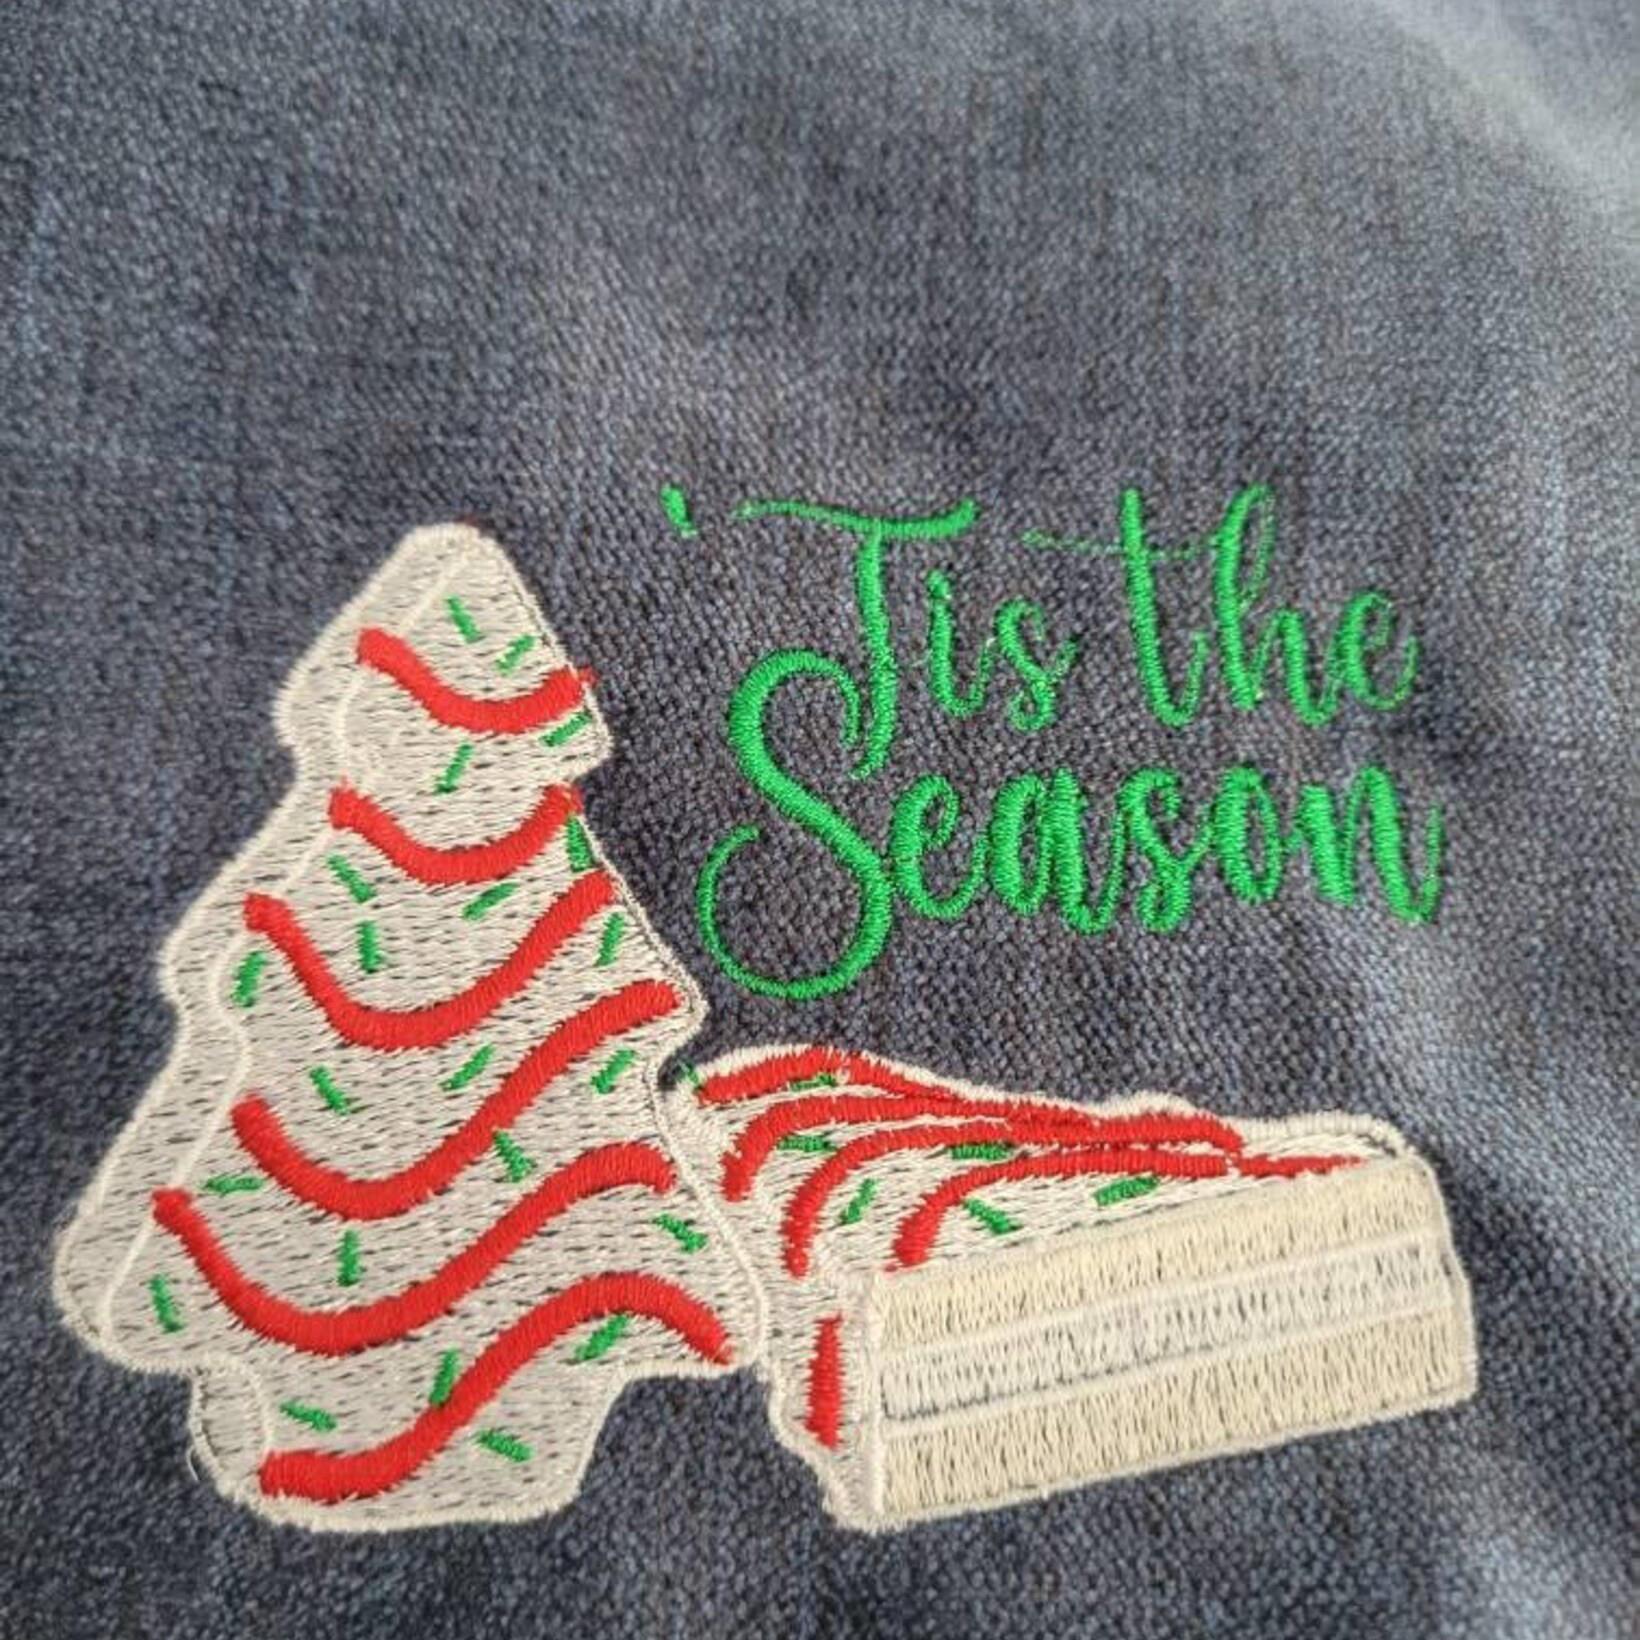 Tis the Season Embroidery: Celebrating Festive Crafts